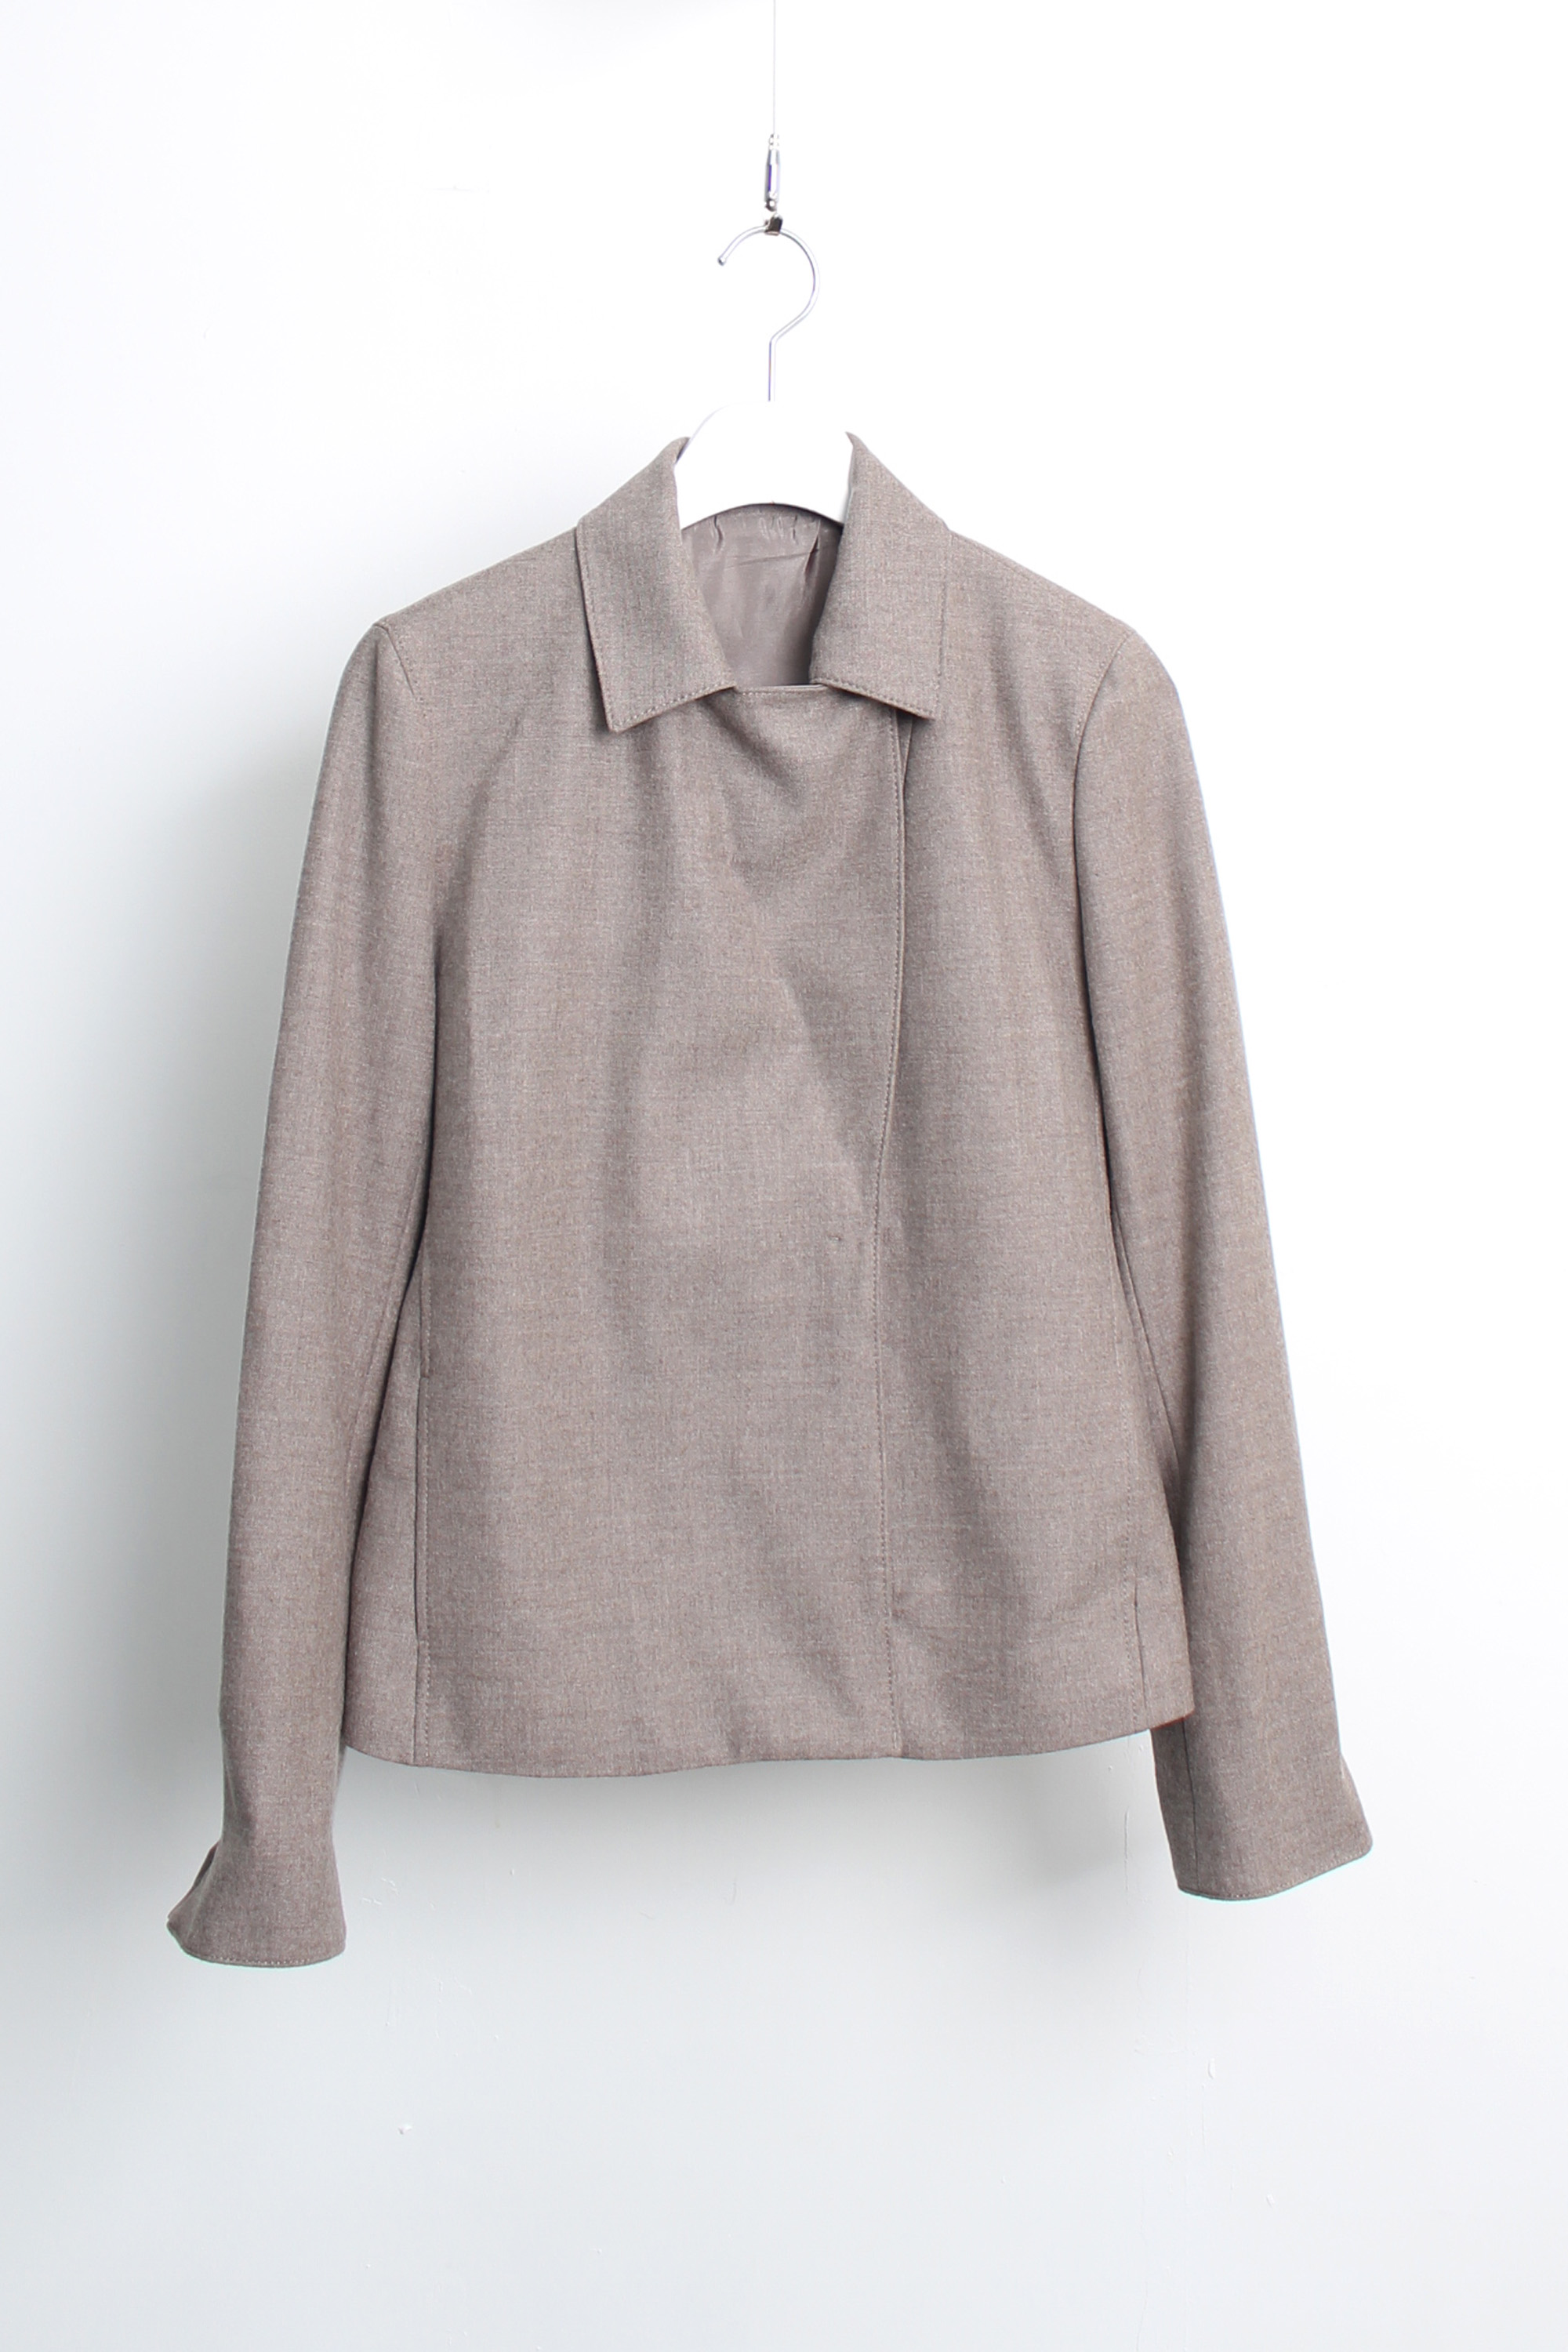 KIYOKO TAKASE jacket(fabric by Loro Piana)